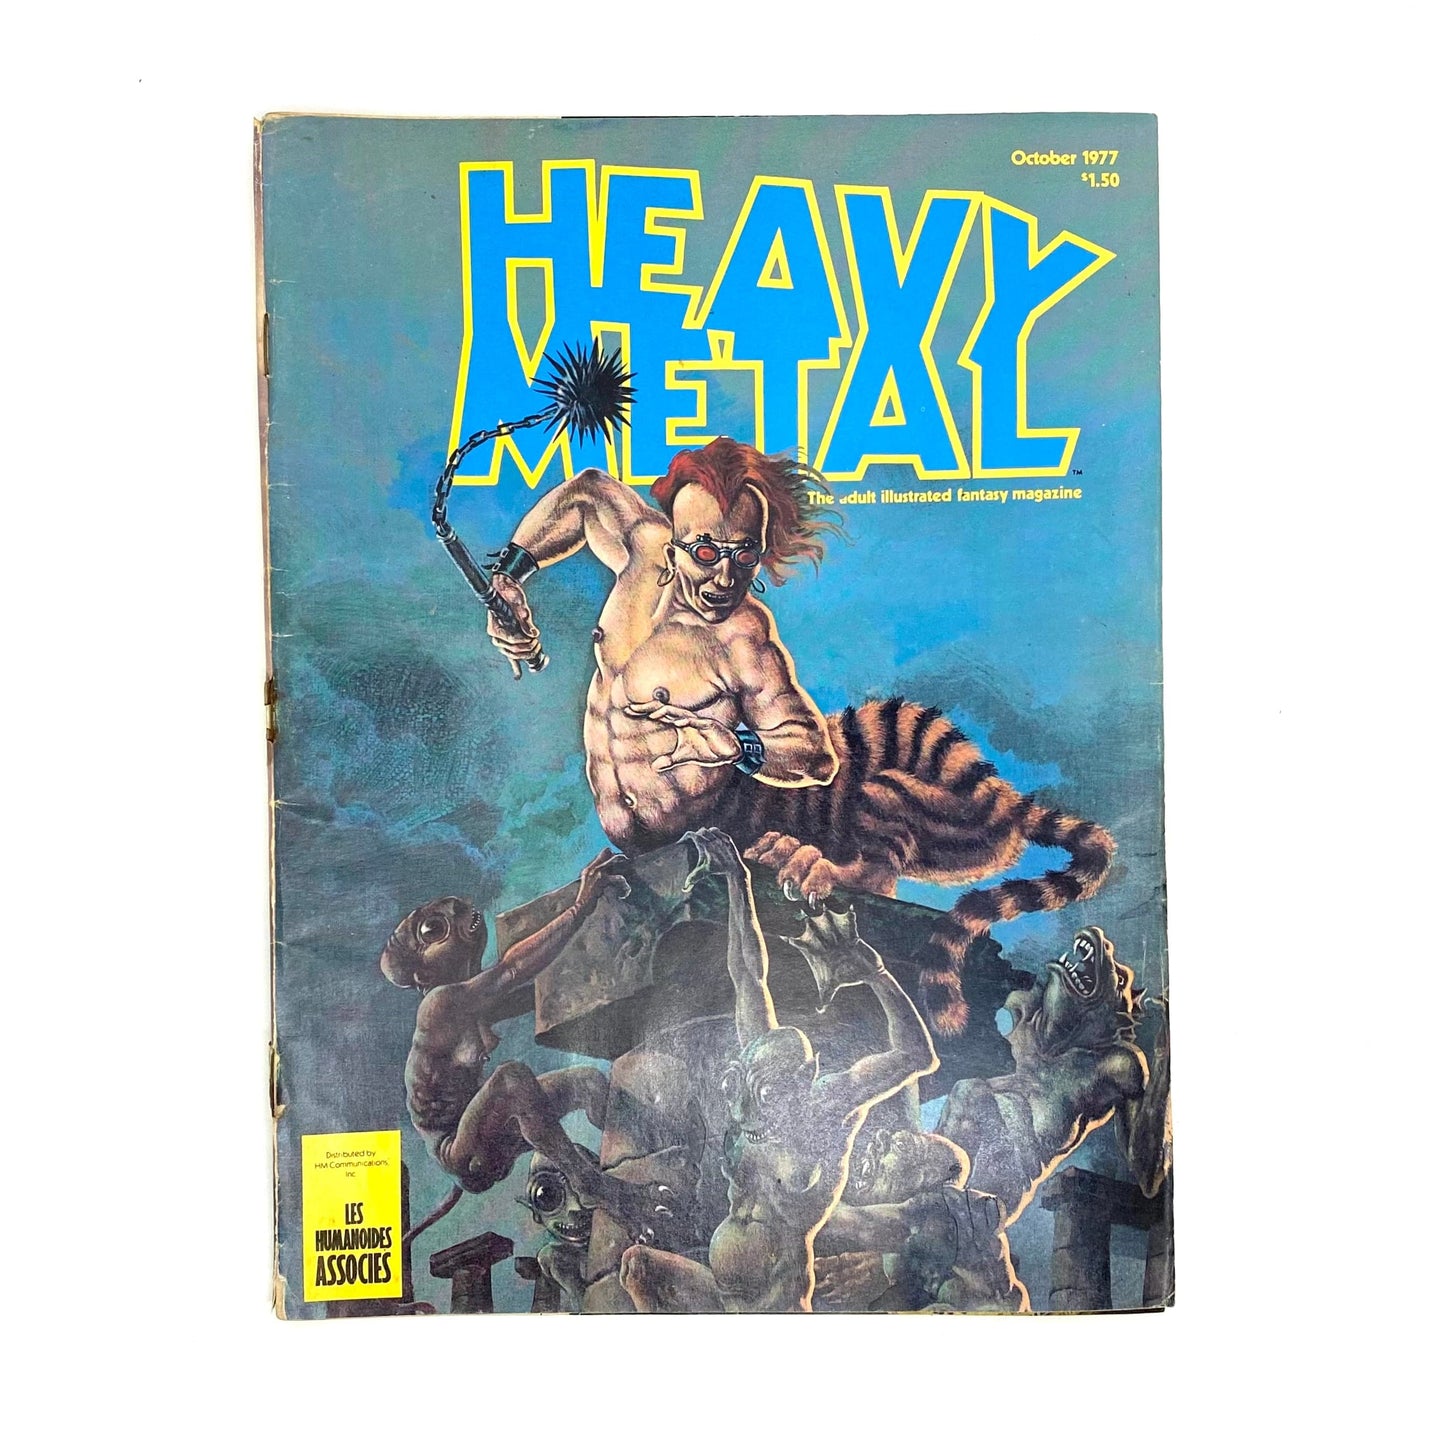 HEAVY METAL - Adult Illustrated Fantasy Erotic Magazine - October 1977